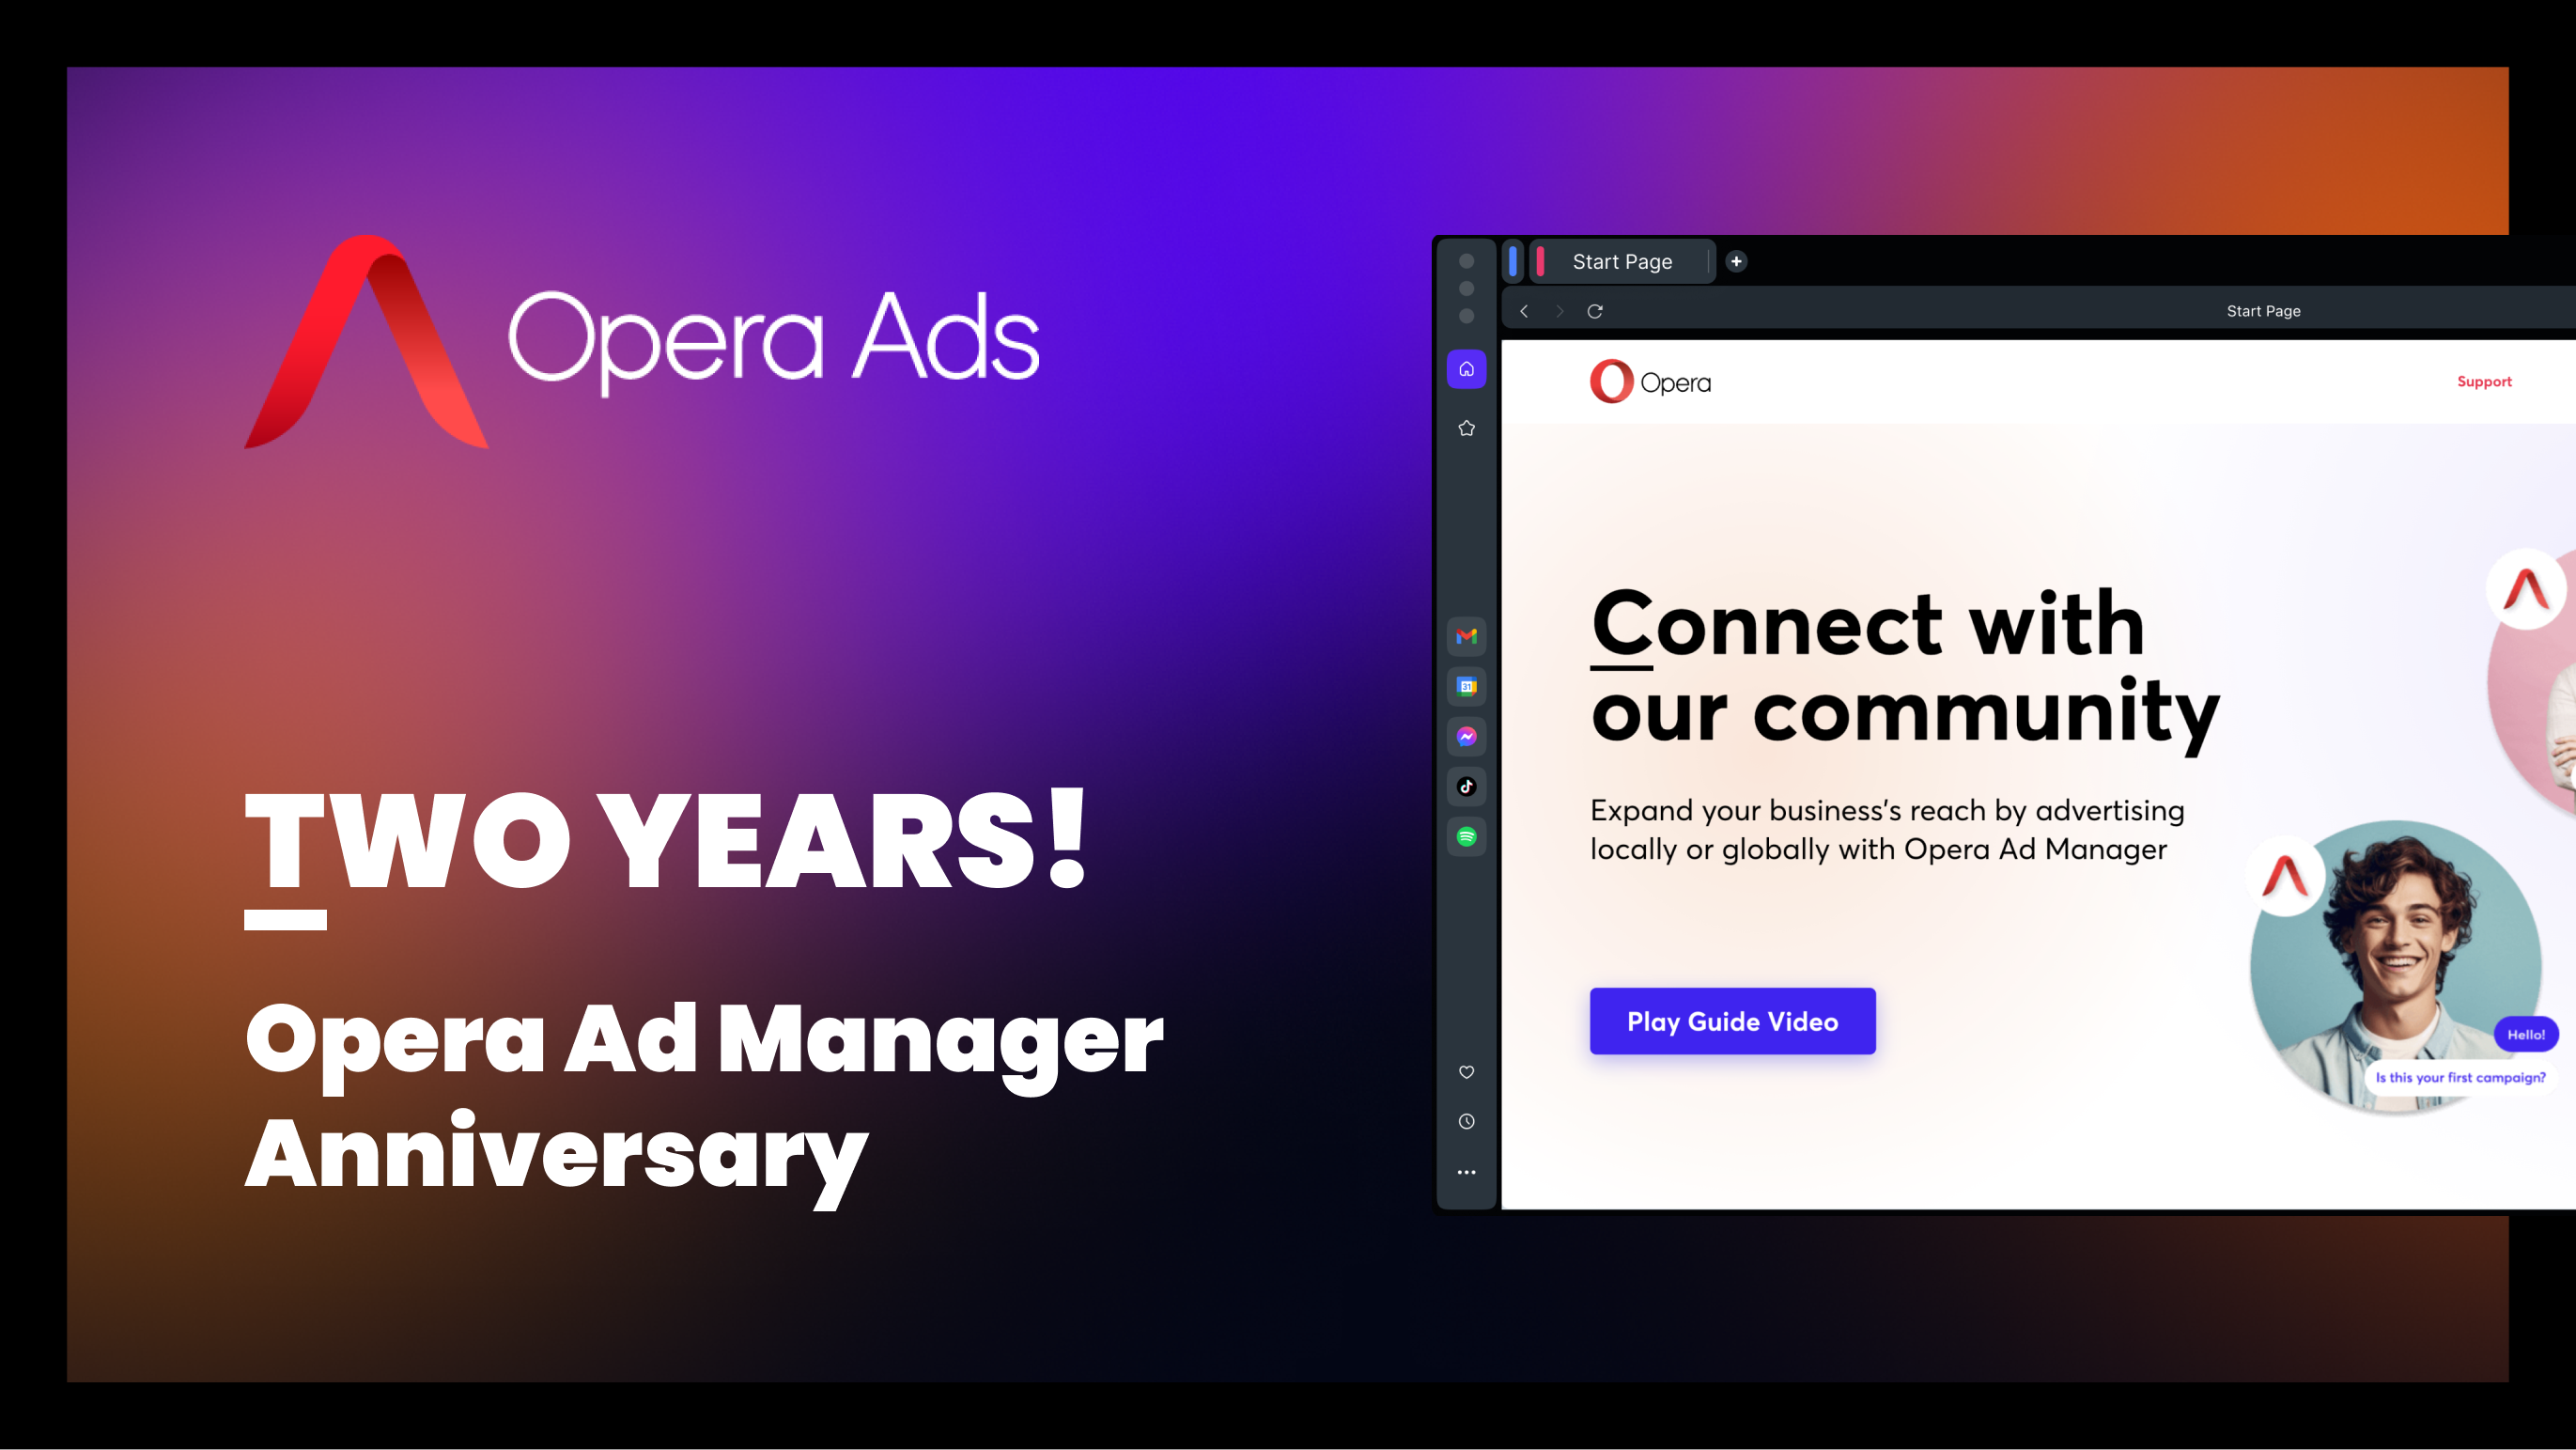 Opera Ads manager turns 2